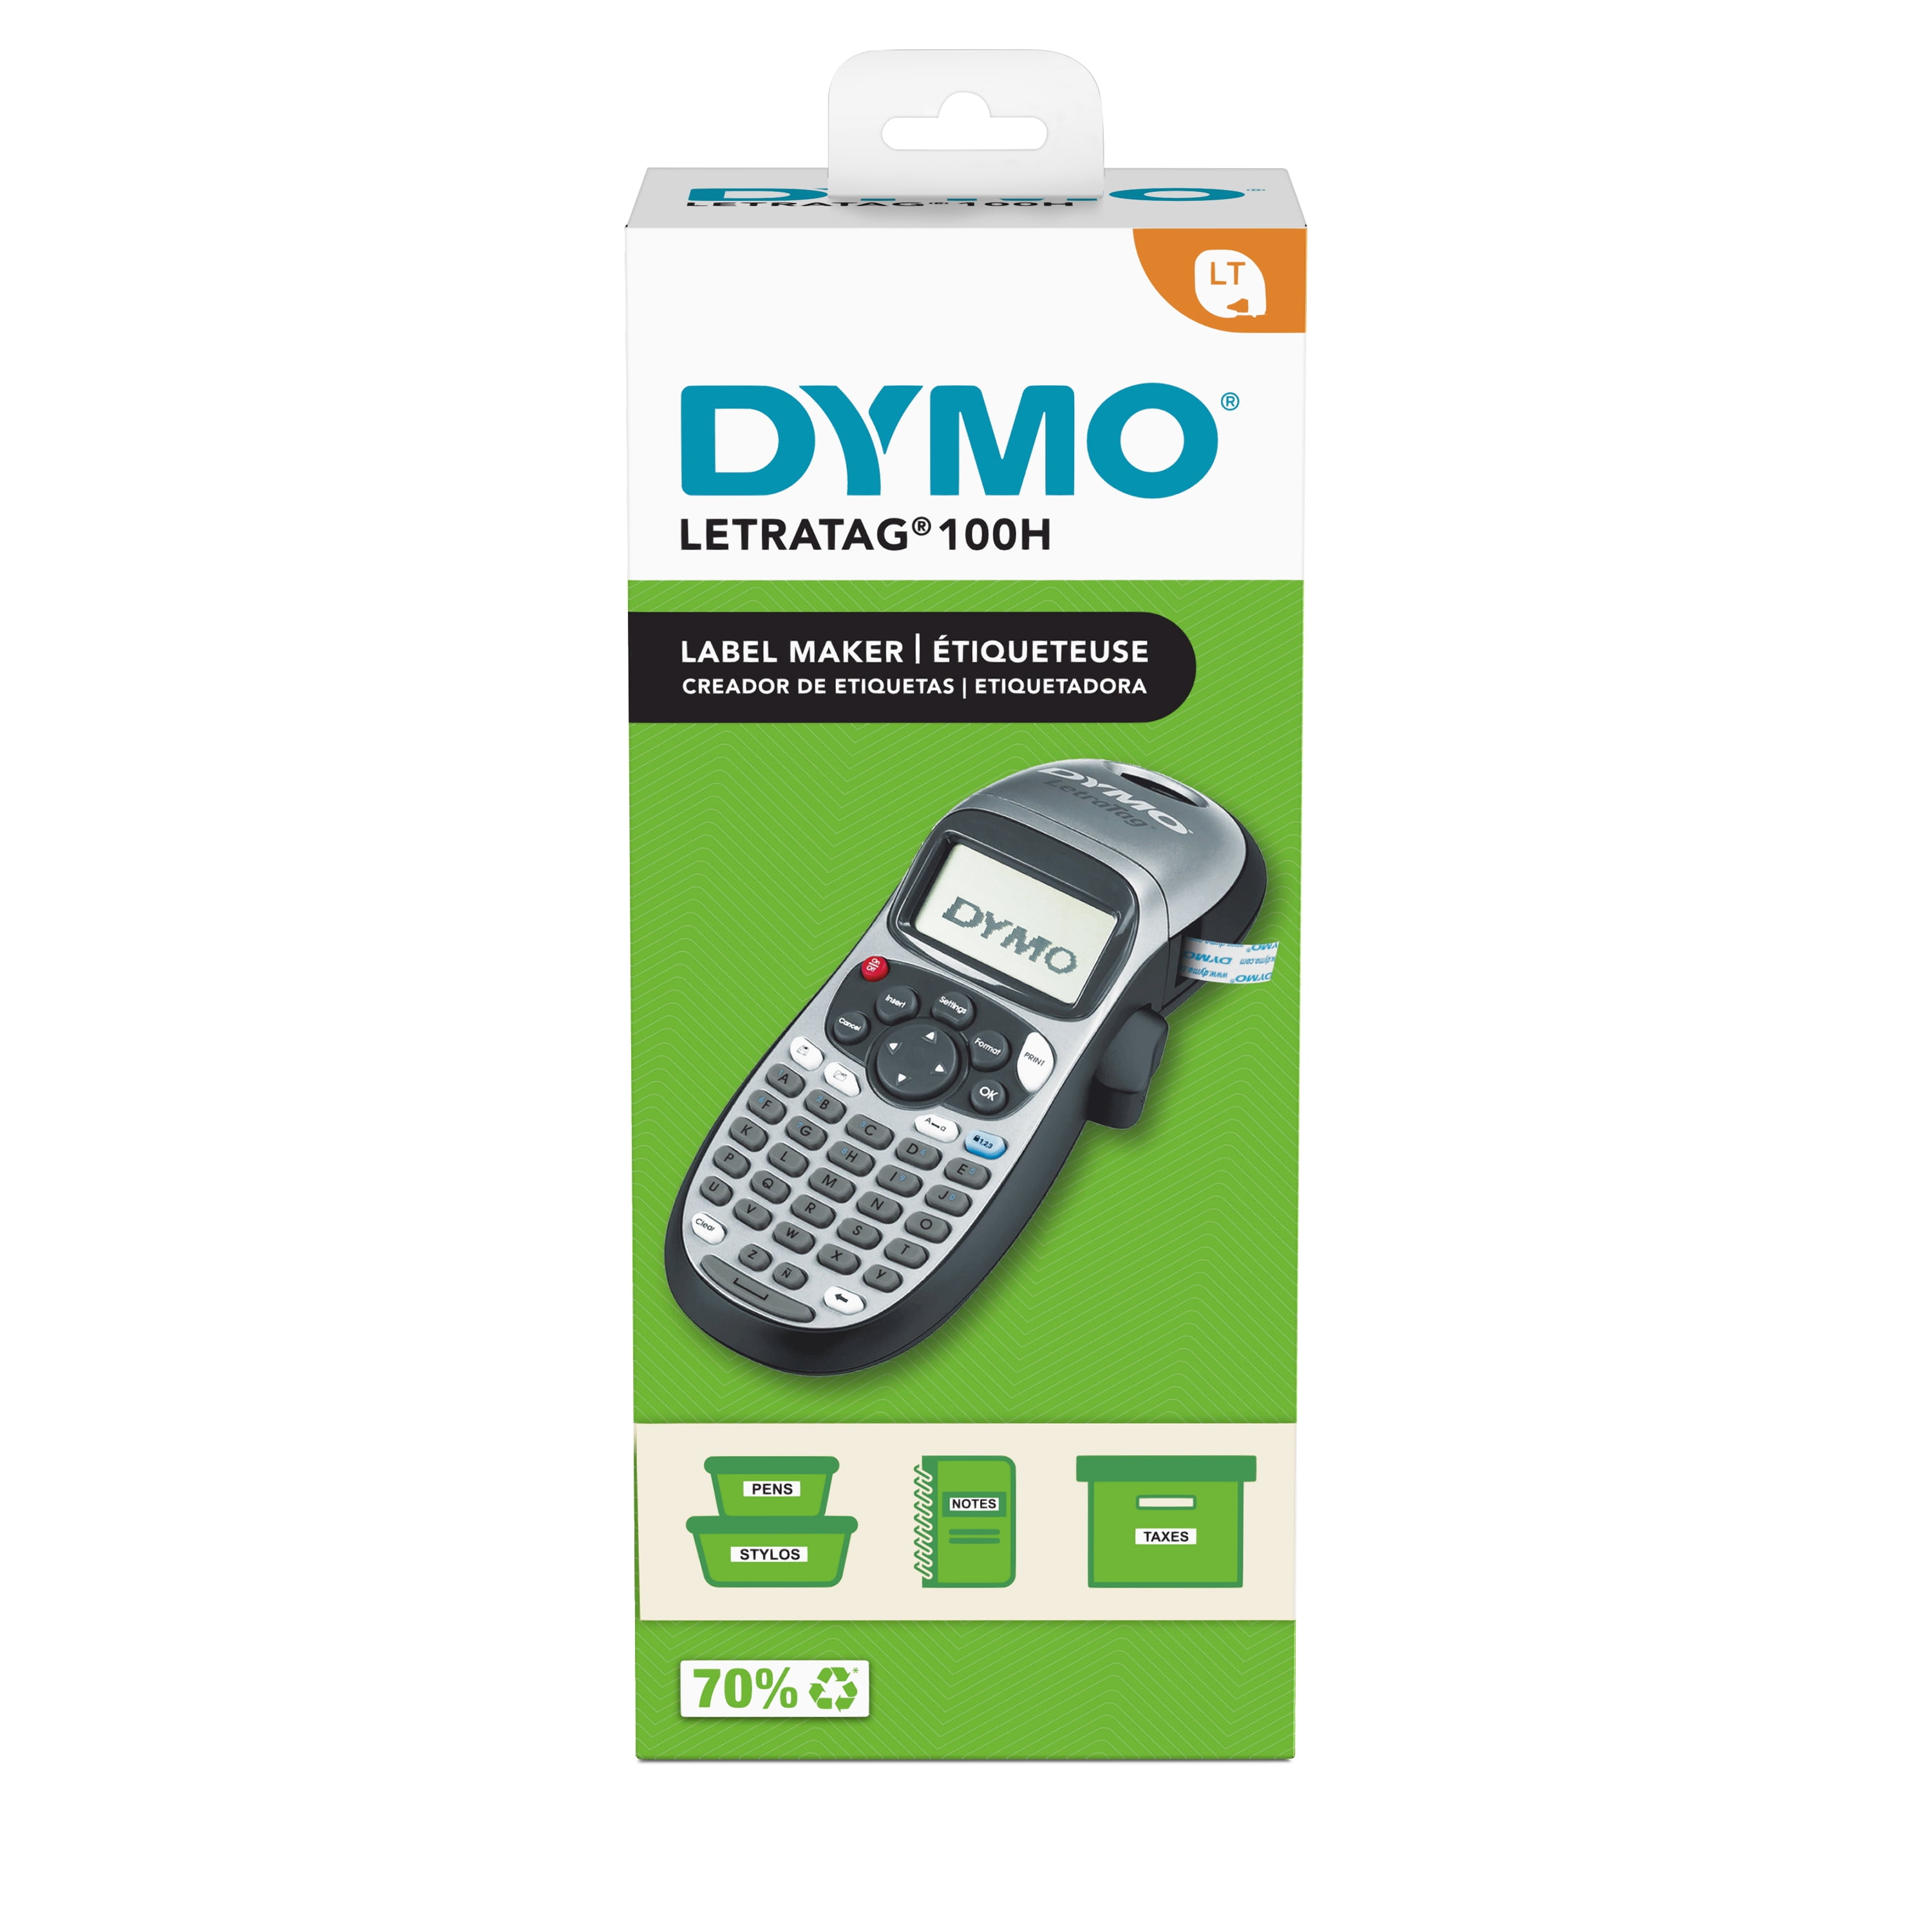 Dymo LetraTag LT-100T Label Maker Thermal Handheld Portable